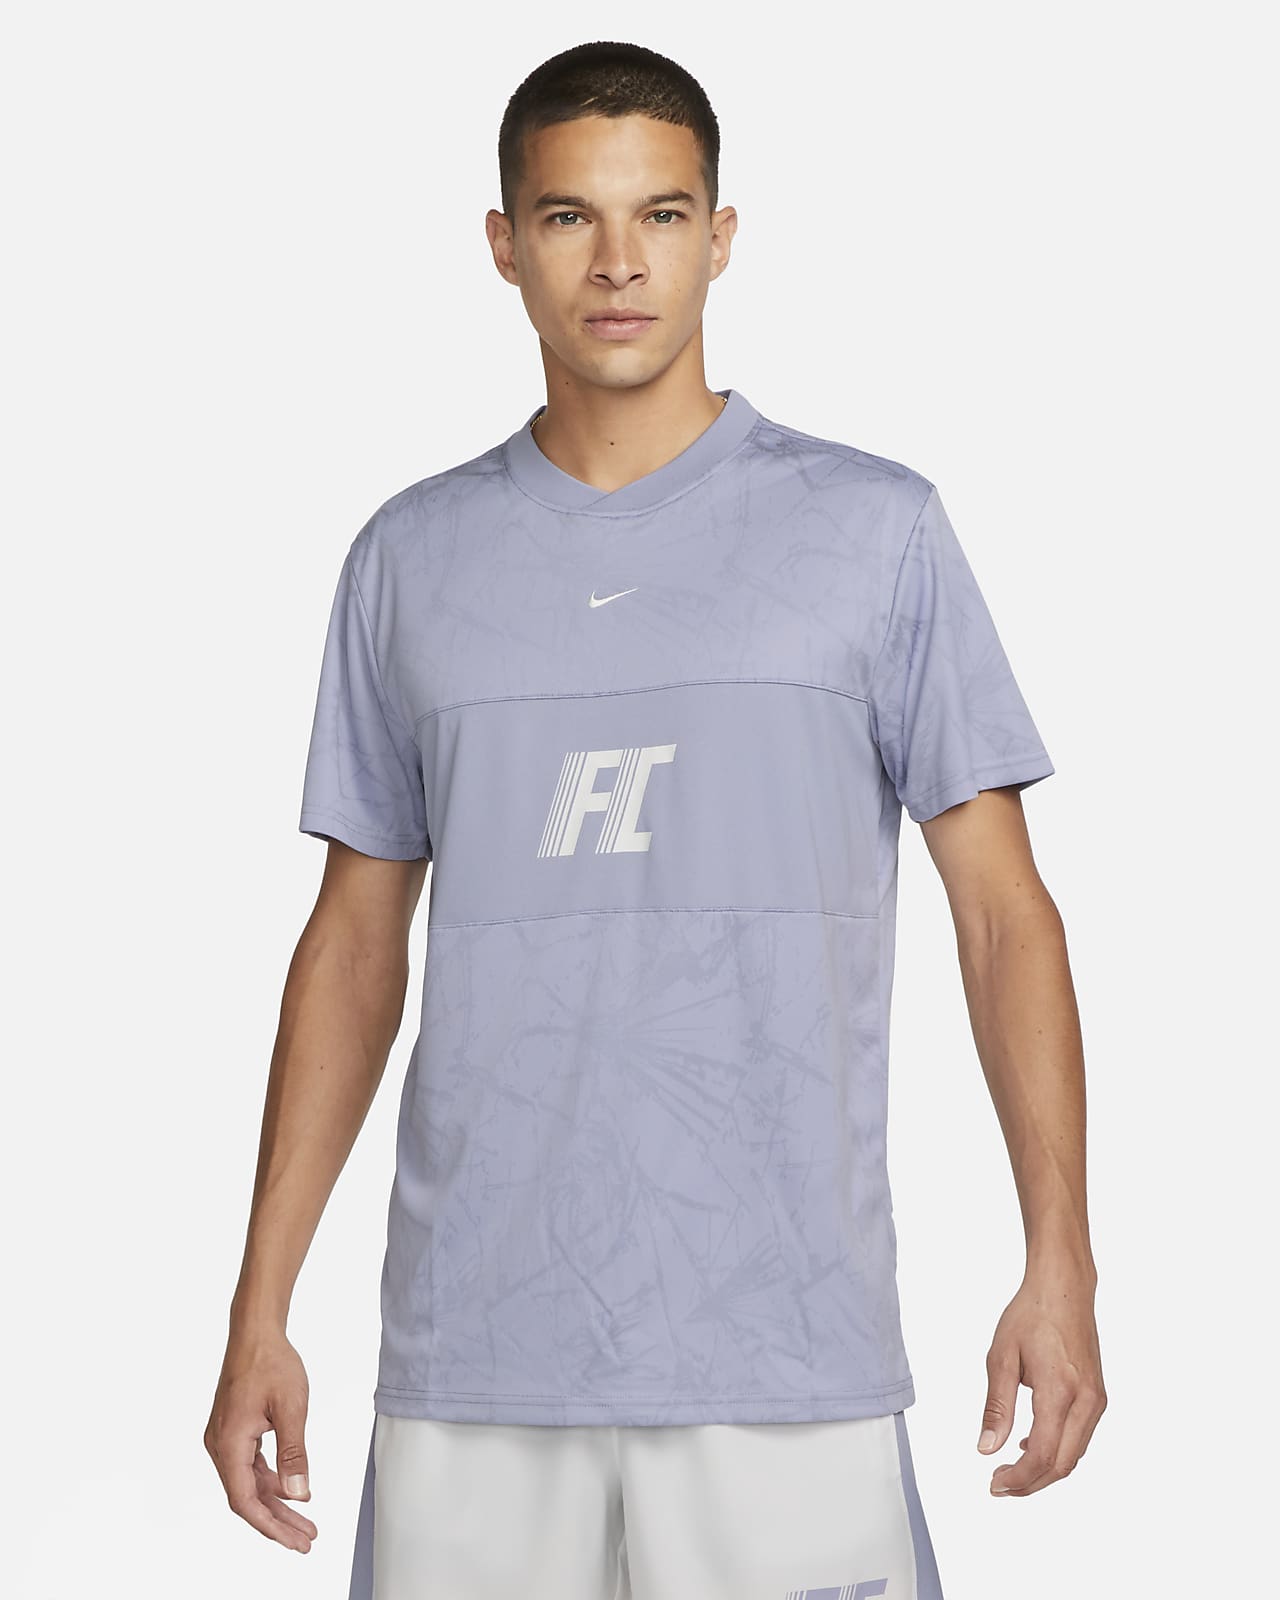 Jersey de fútbol de manga para Nike Dri-FIT Nike.com